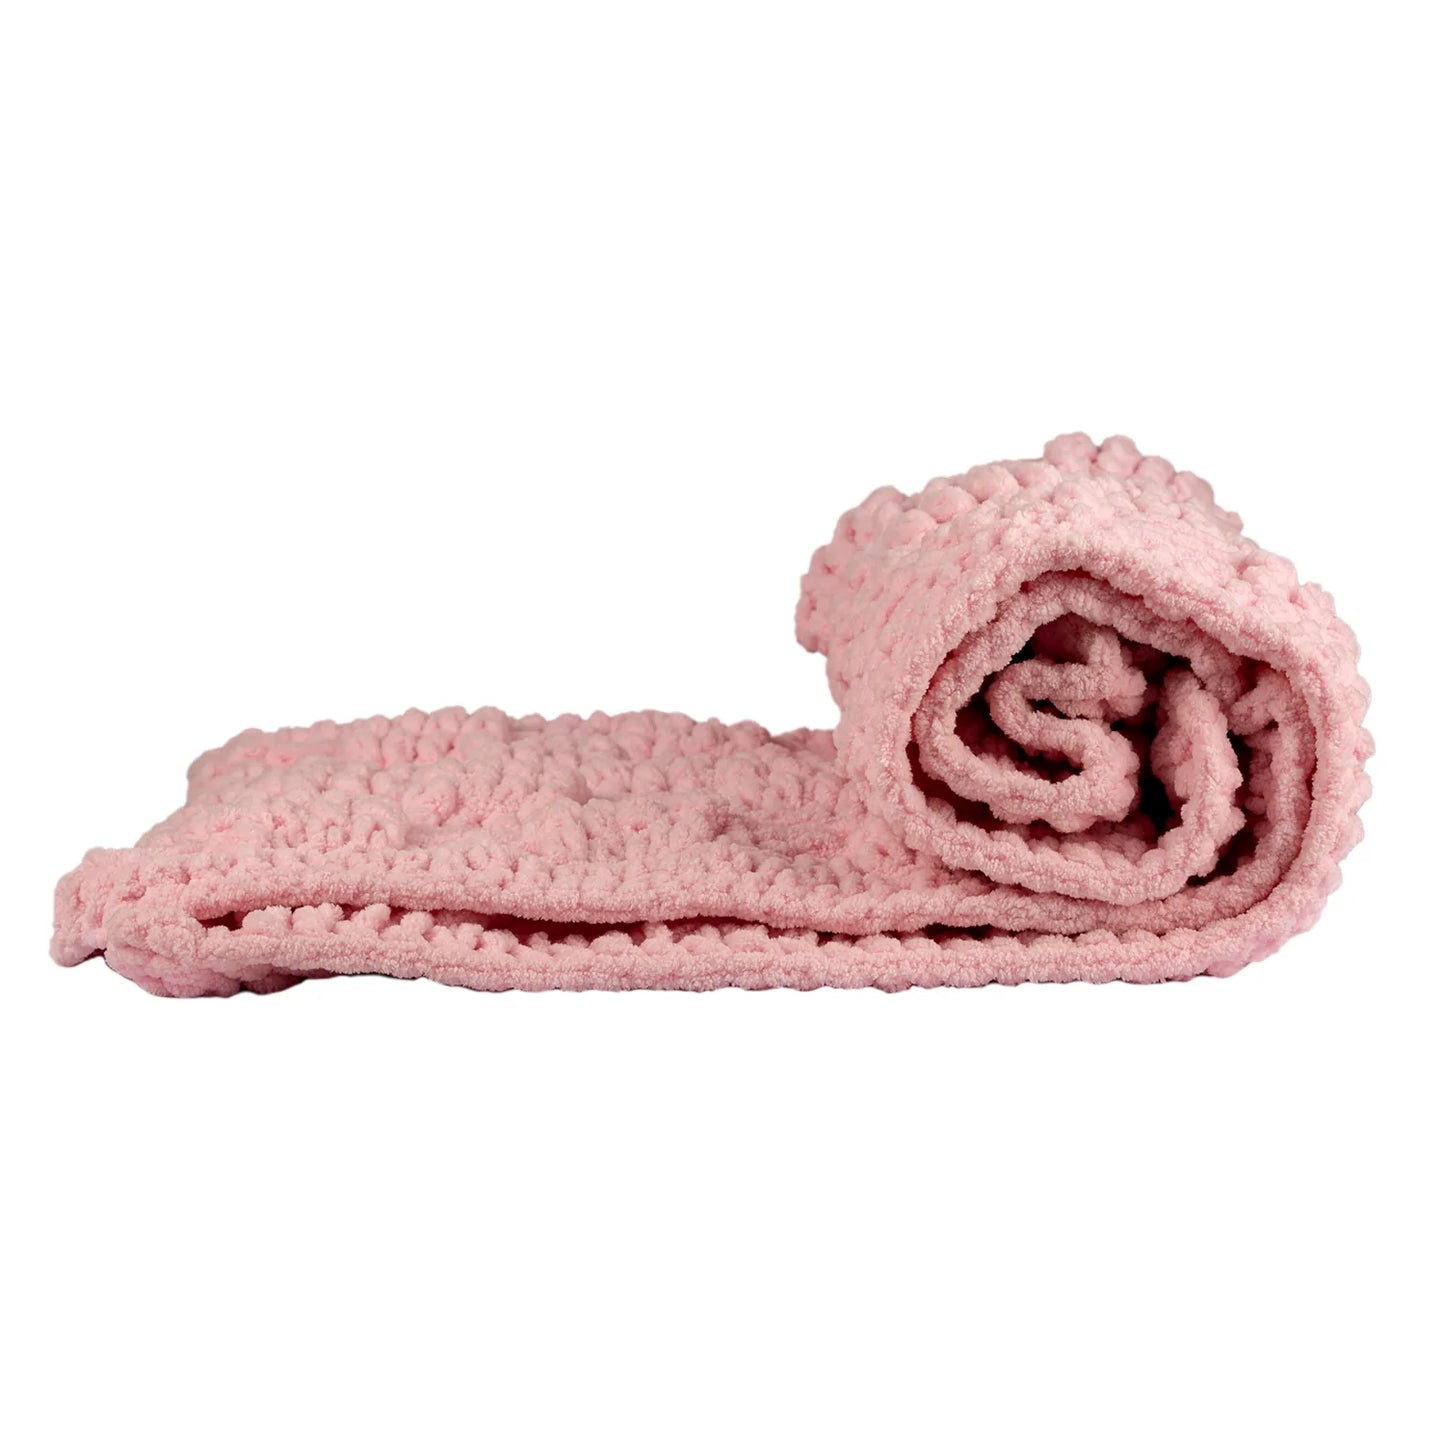 Pink Baby Blanket